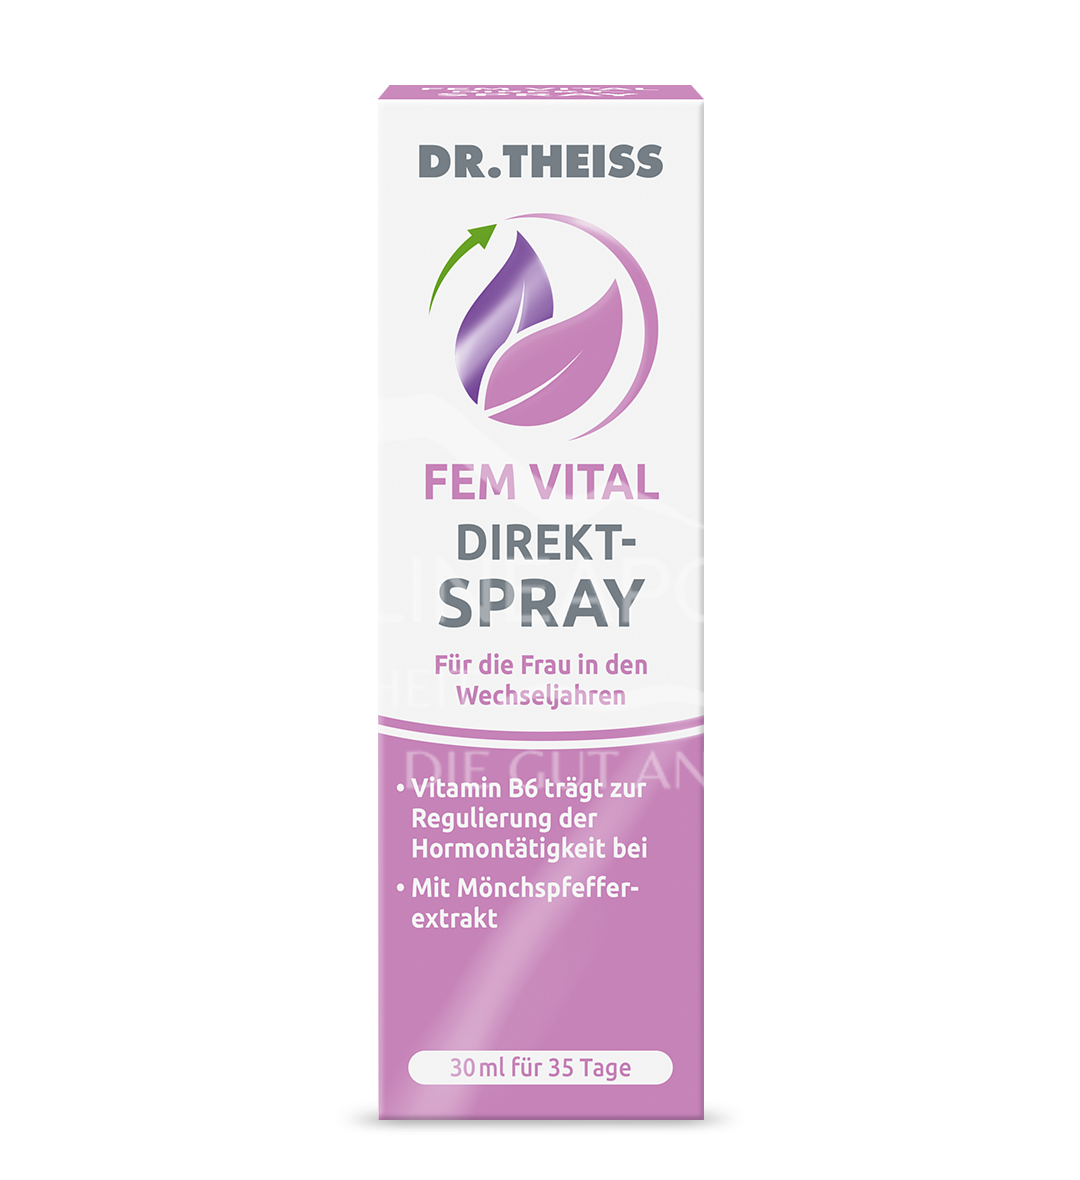 DR. THEISS FEM VITAL Direkt-Spray